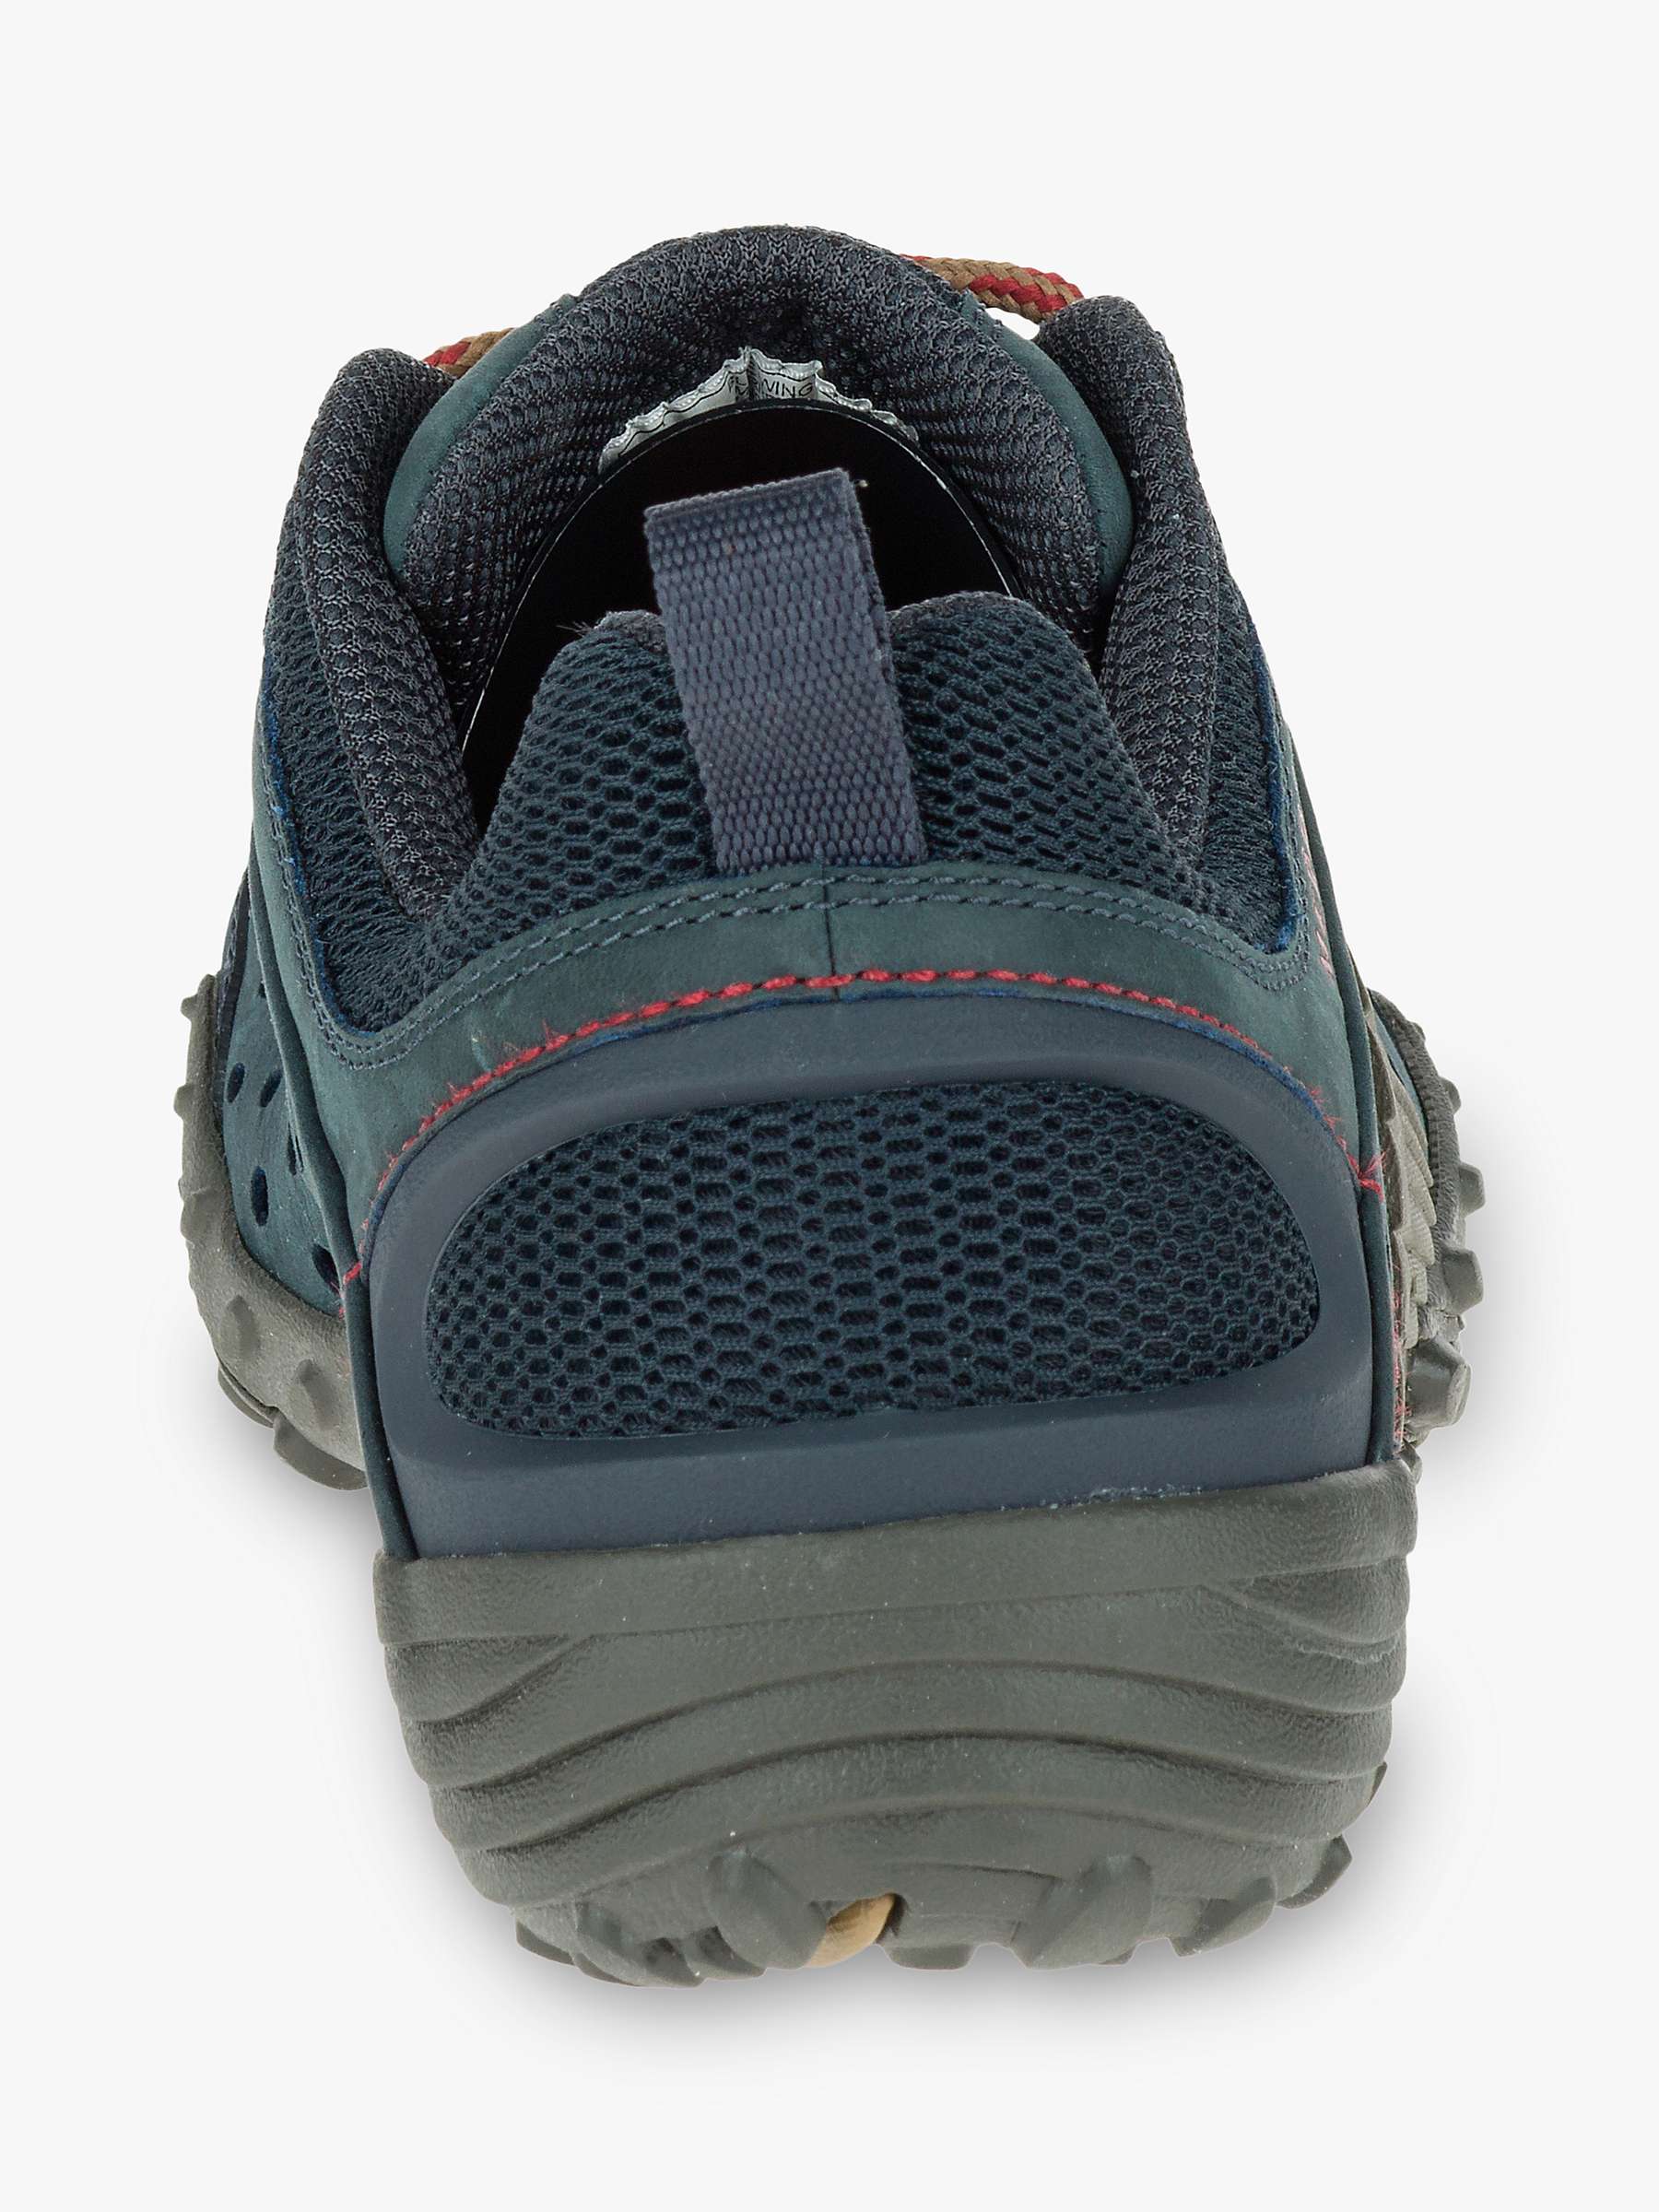 Buy Merrell Intercept Men's Leather Walking Shoes, Blue Wing Online at johnlewis.com